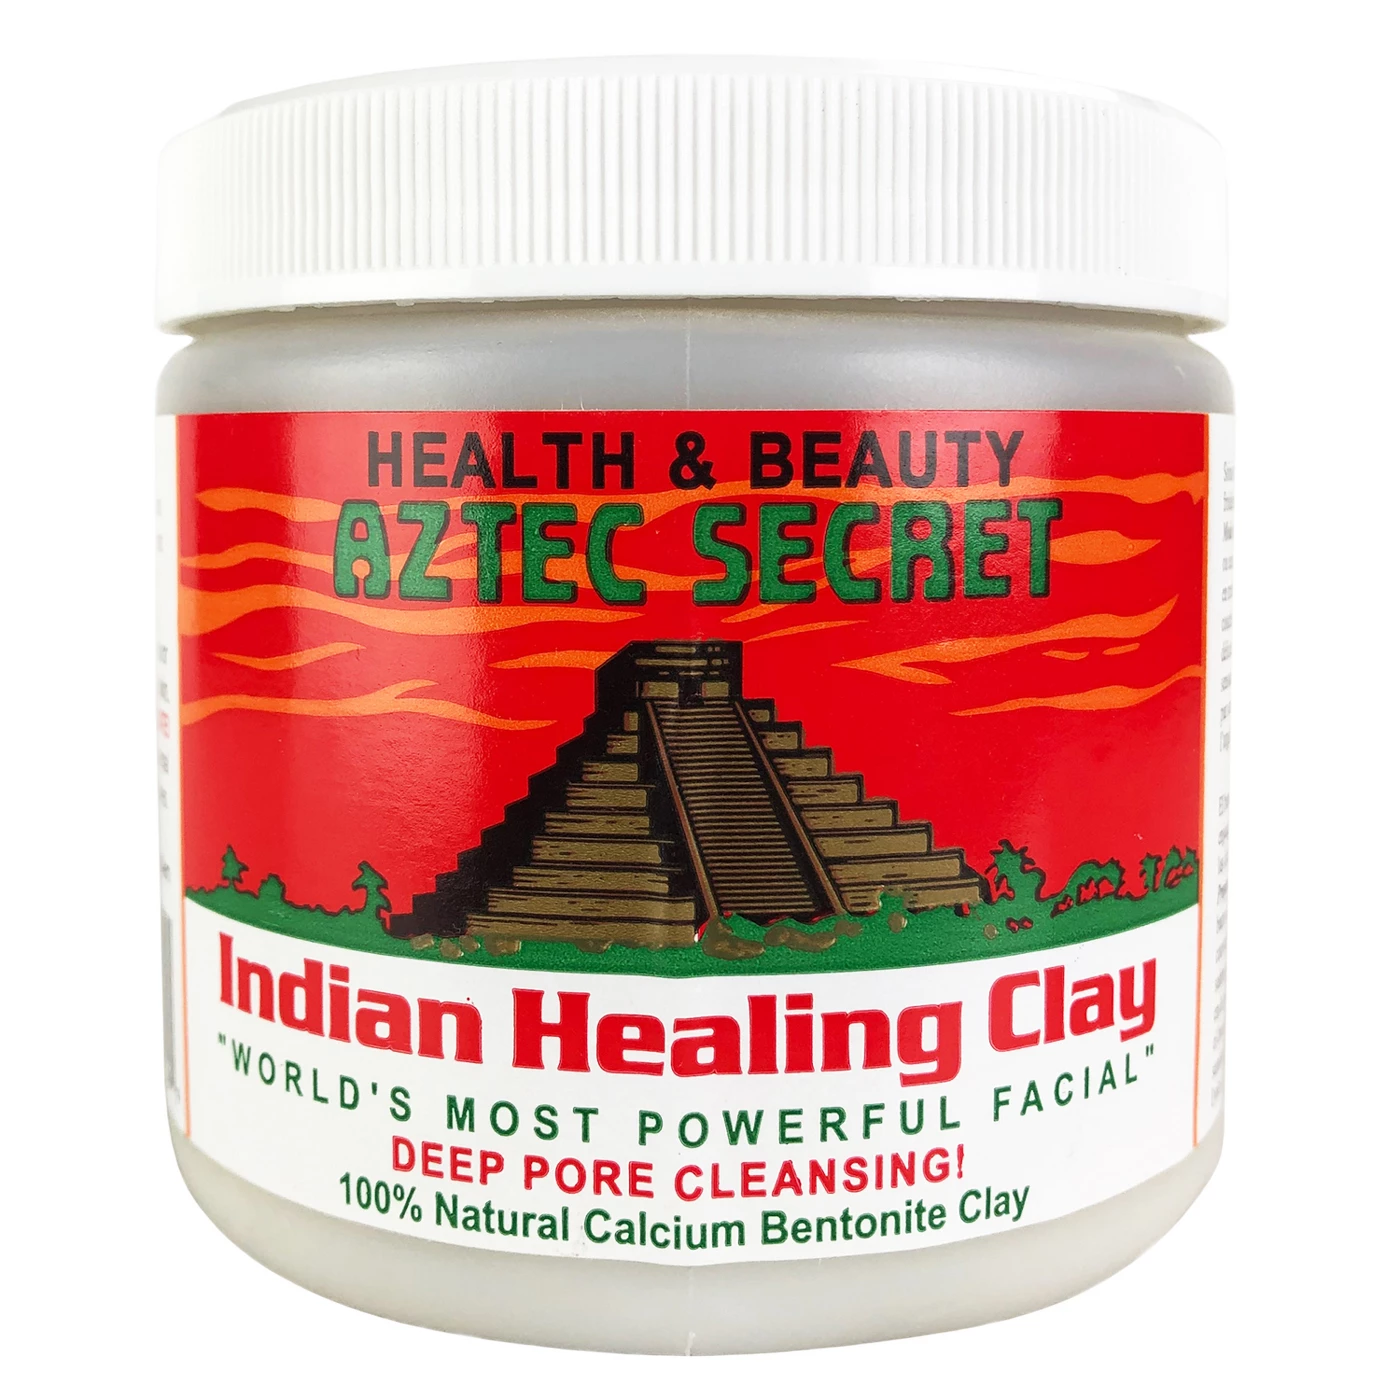 Aztec Secret Indian Healing Clay Facial Treatment - 15.5oz - image 1 of 3